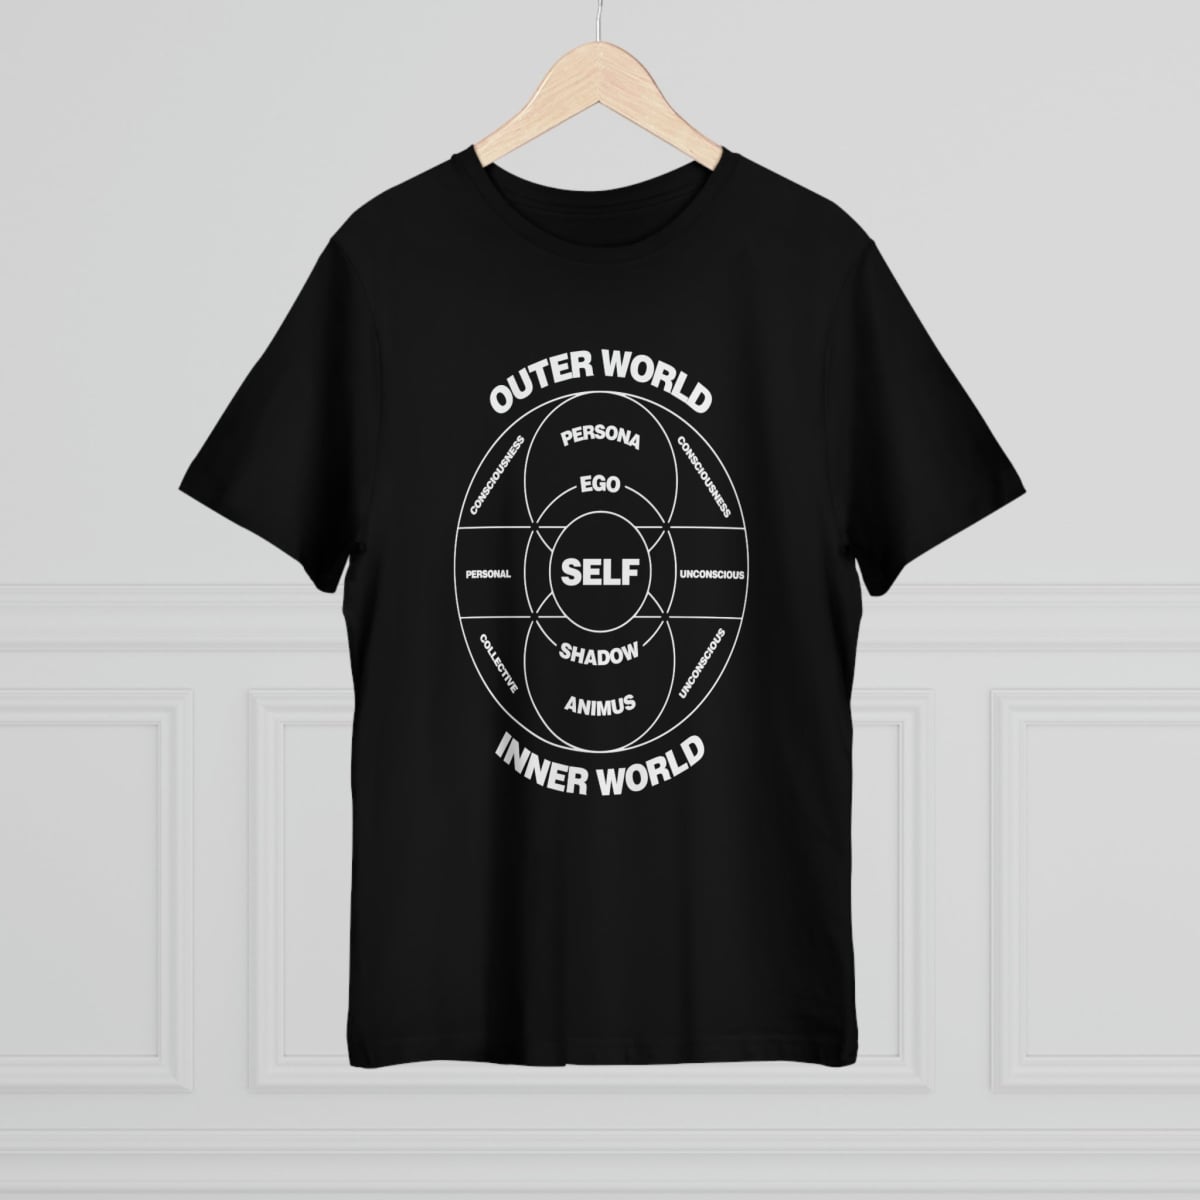 Model of the Psyche Carl Jung T-shirt